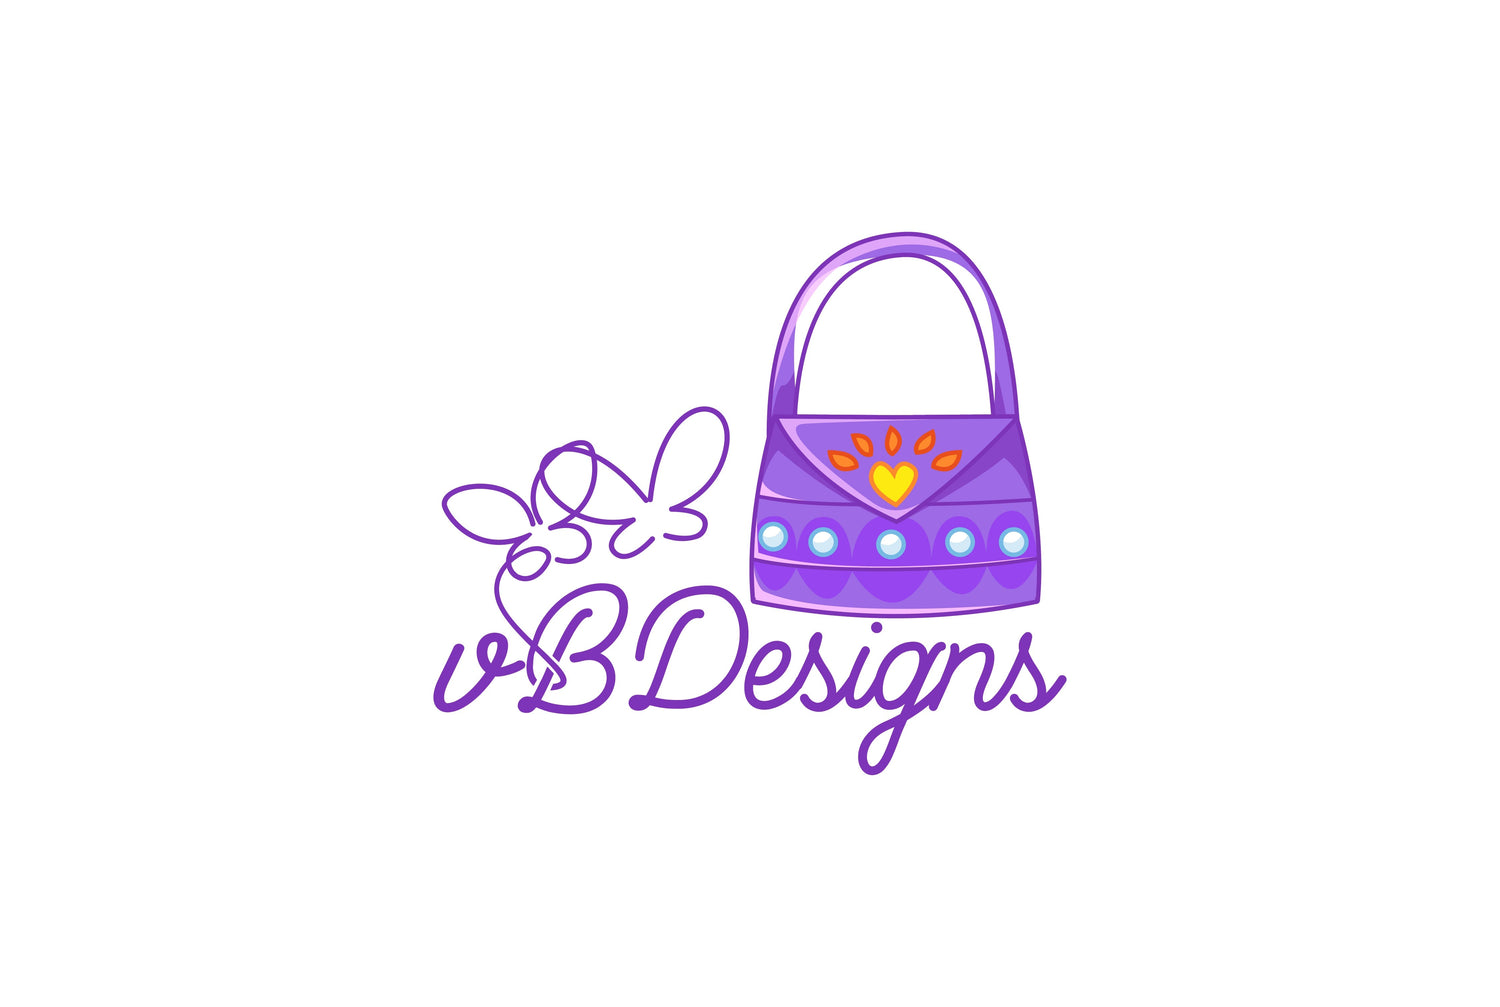 vb-designs